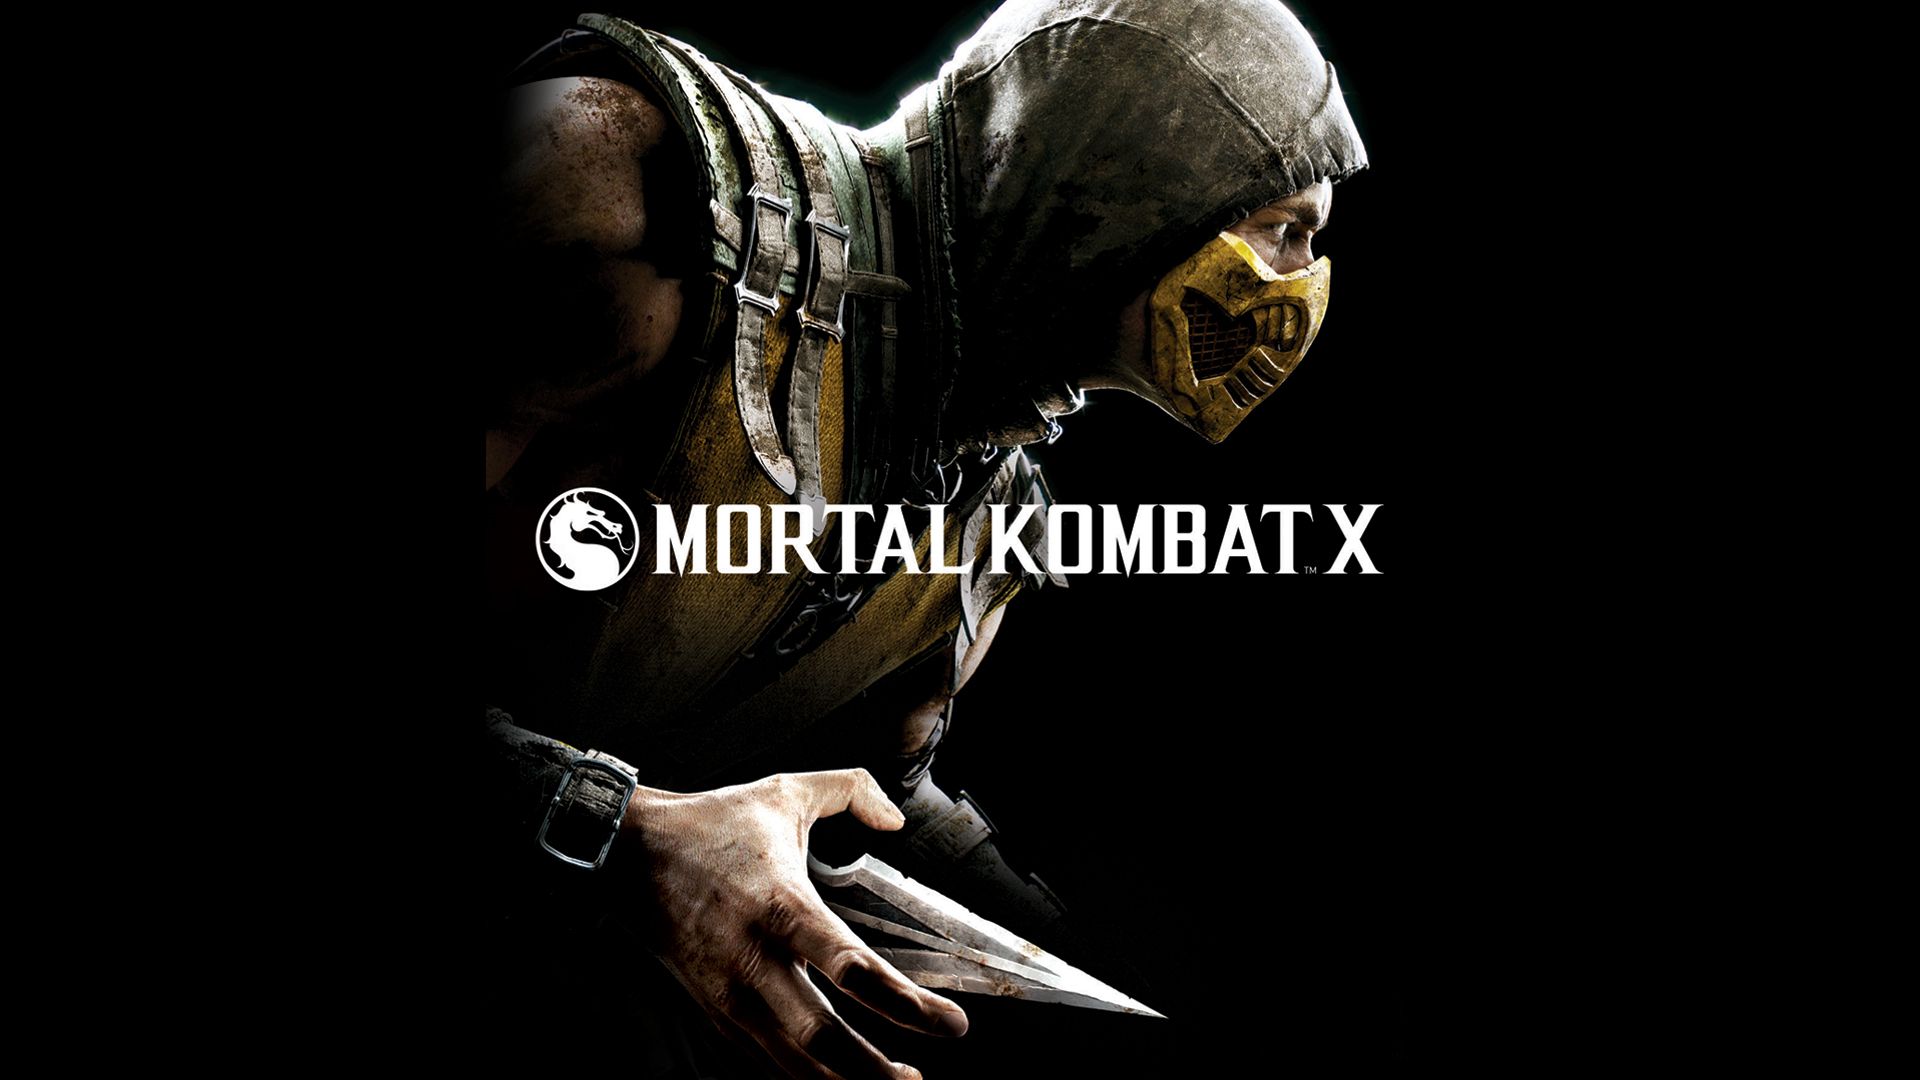 Mortal Kombat X Wallpaper 1080p on .wallpaperafari.com